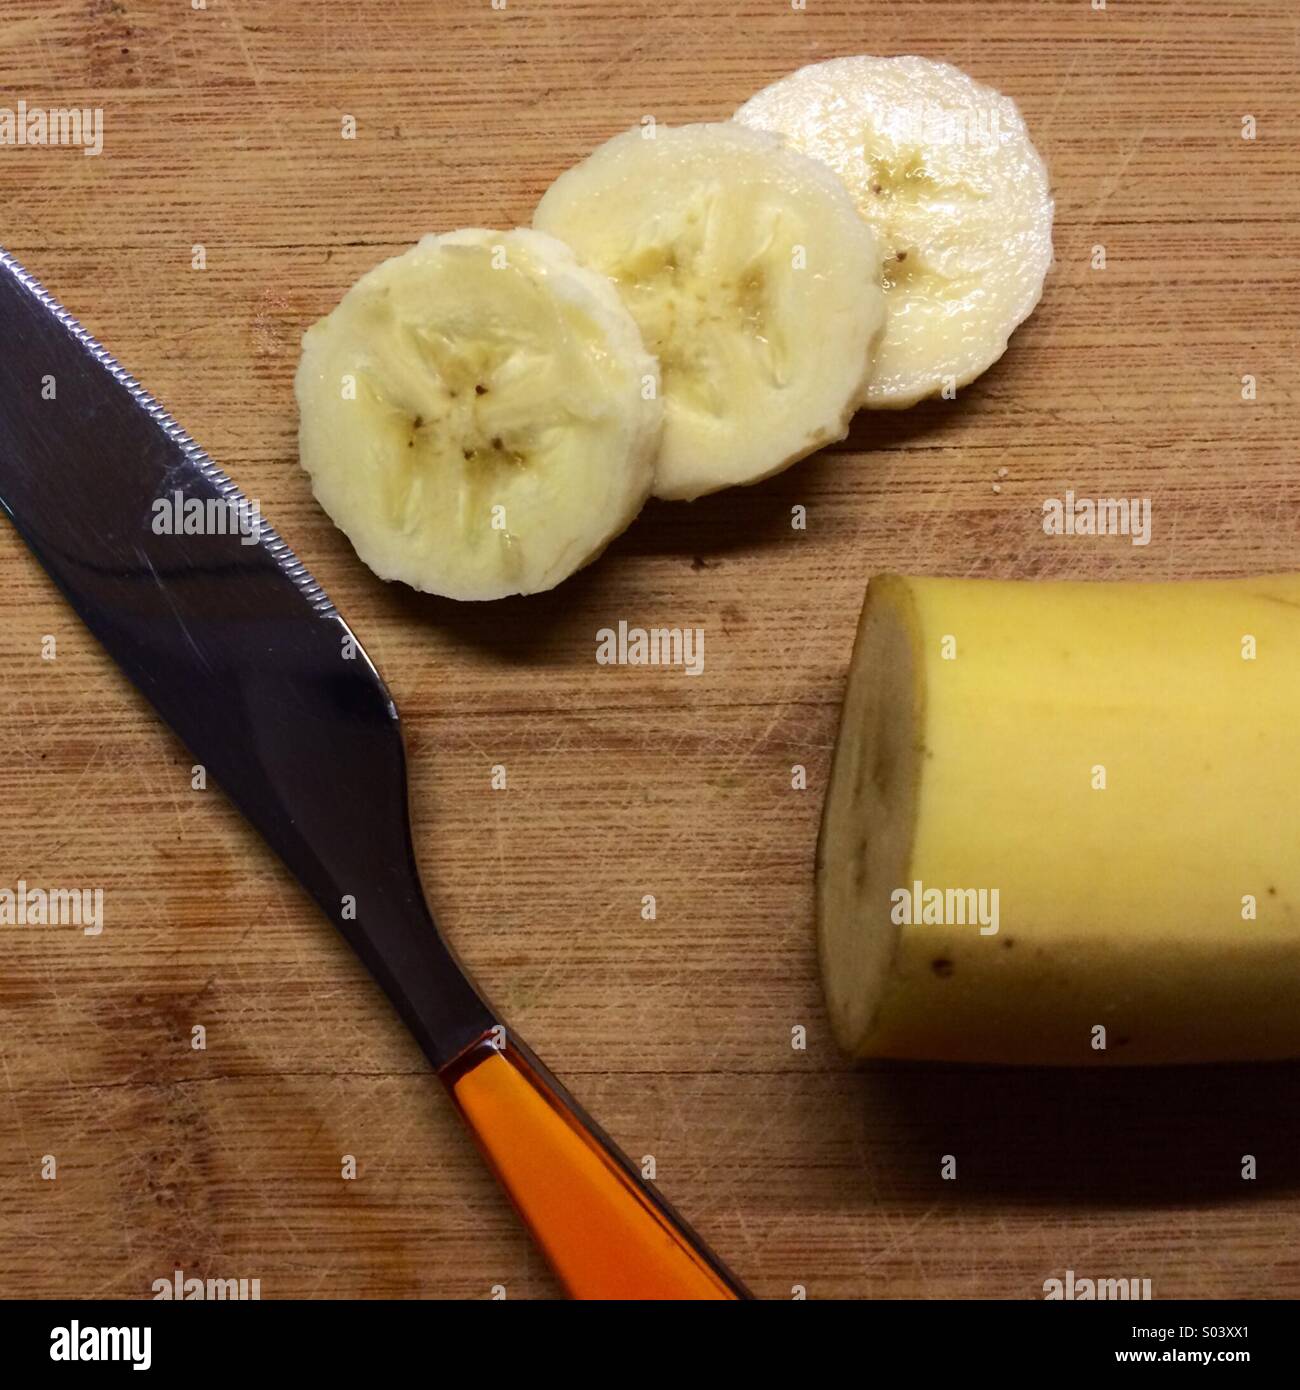 Sliced banana with orange knife Stock Photo